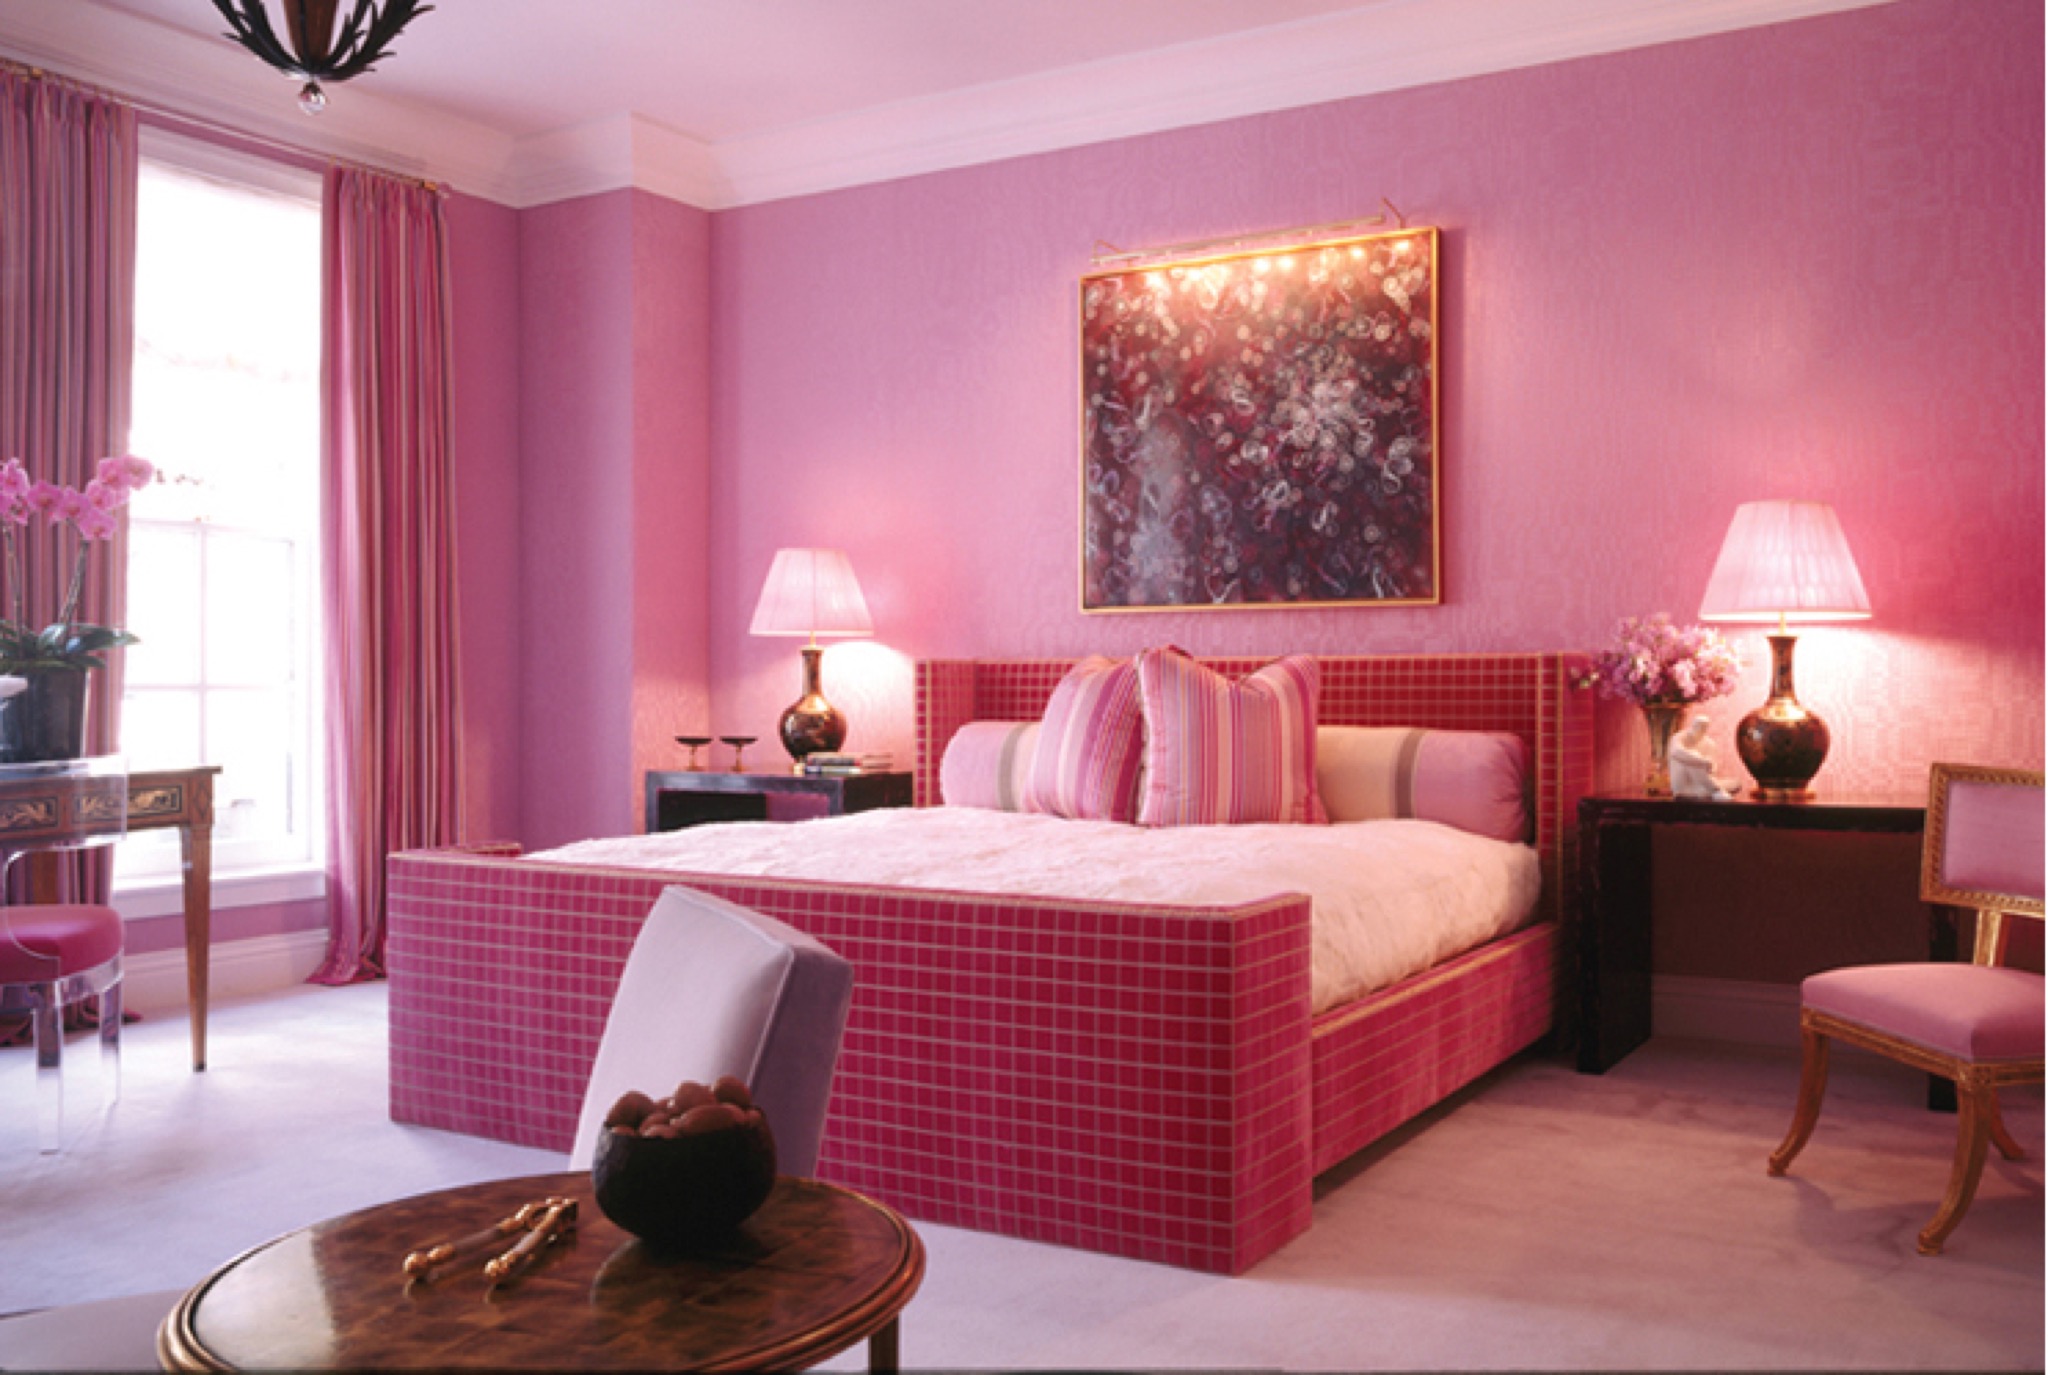 kips_pink_drapes_slipperchairs_ottoman_bed_beding_walluph